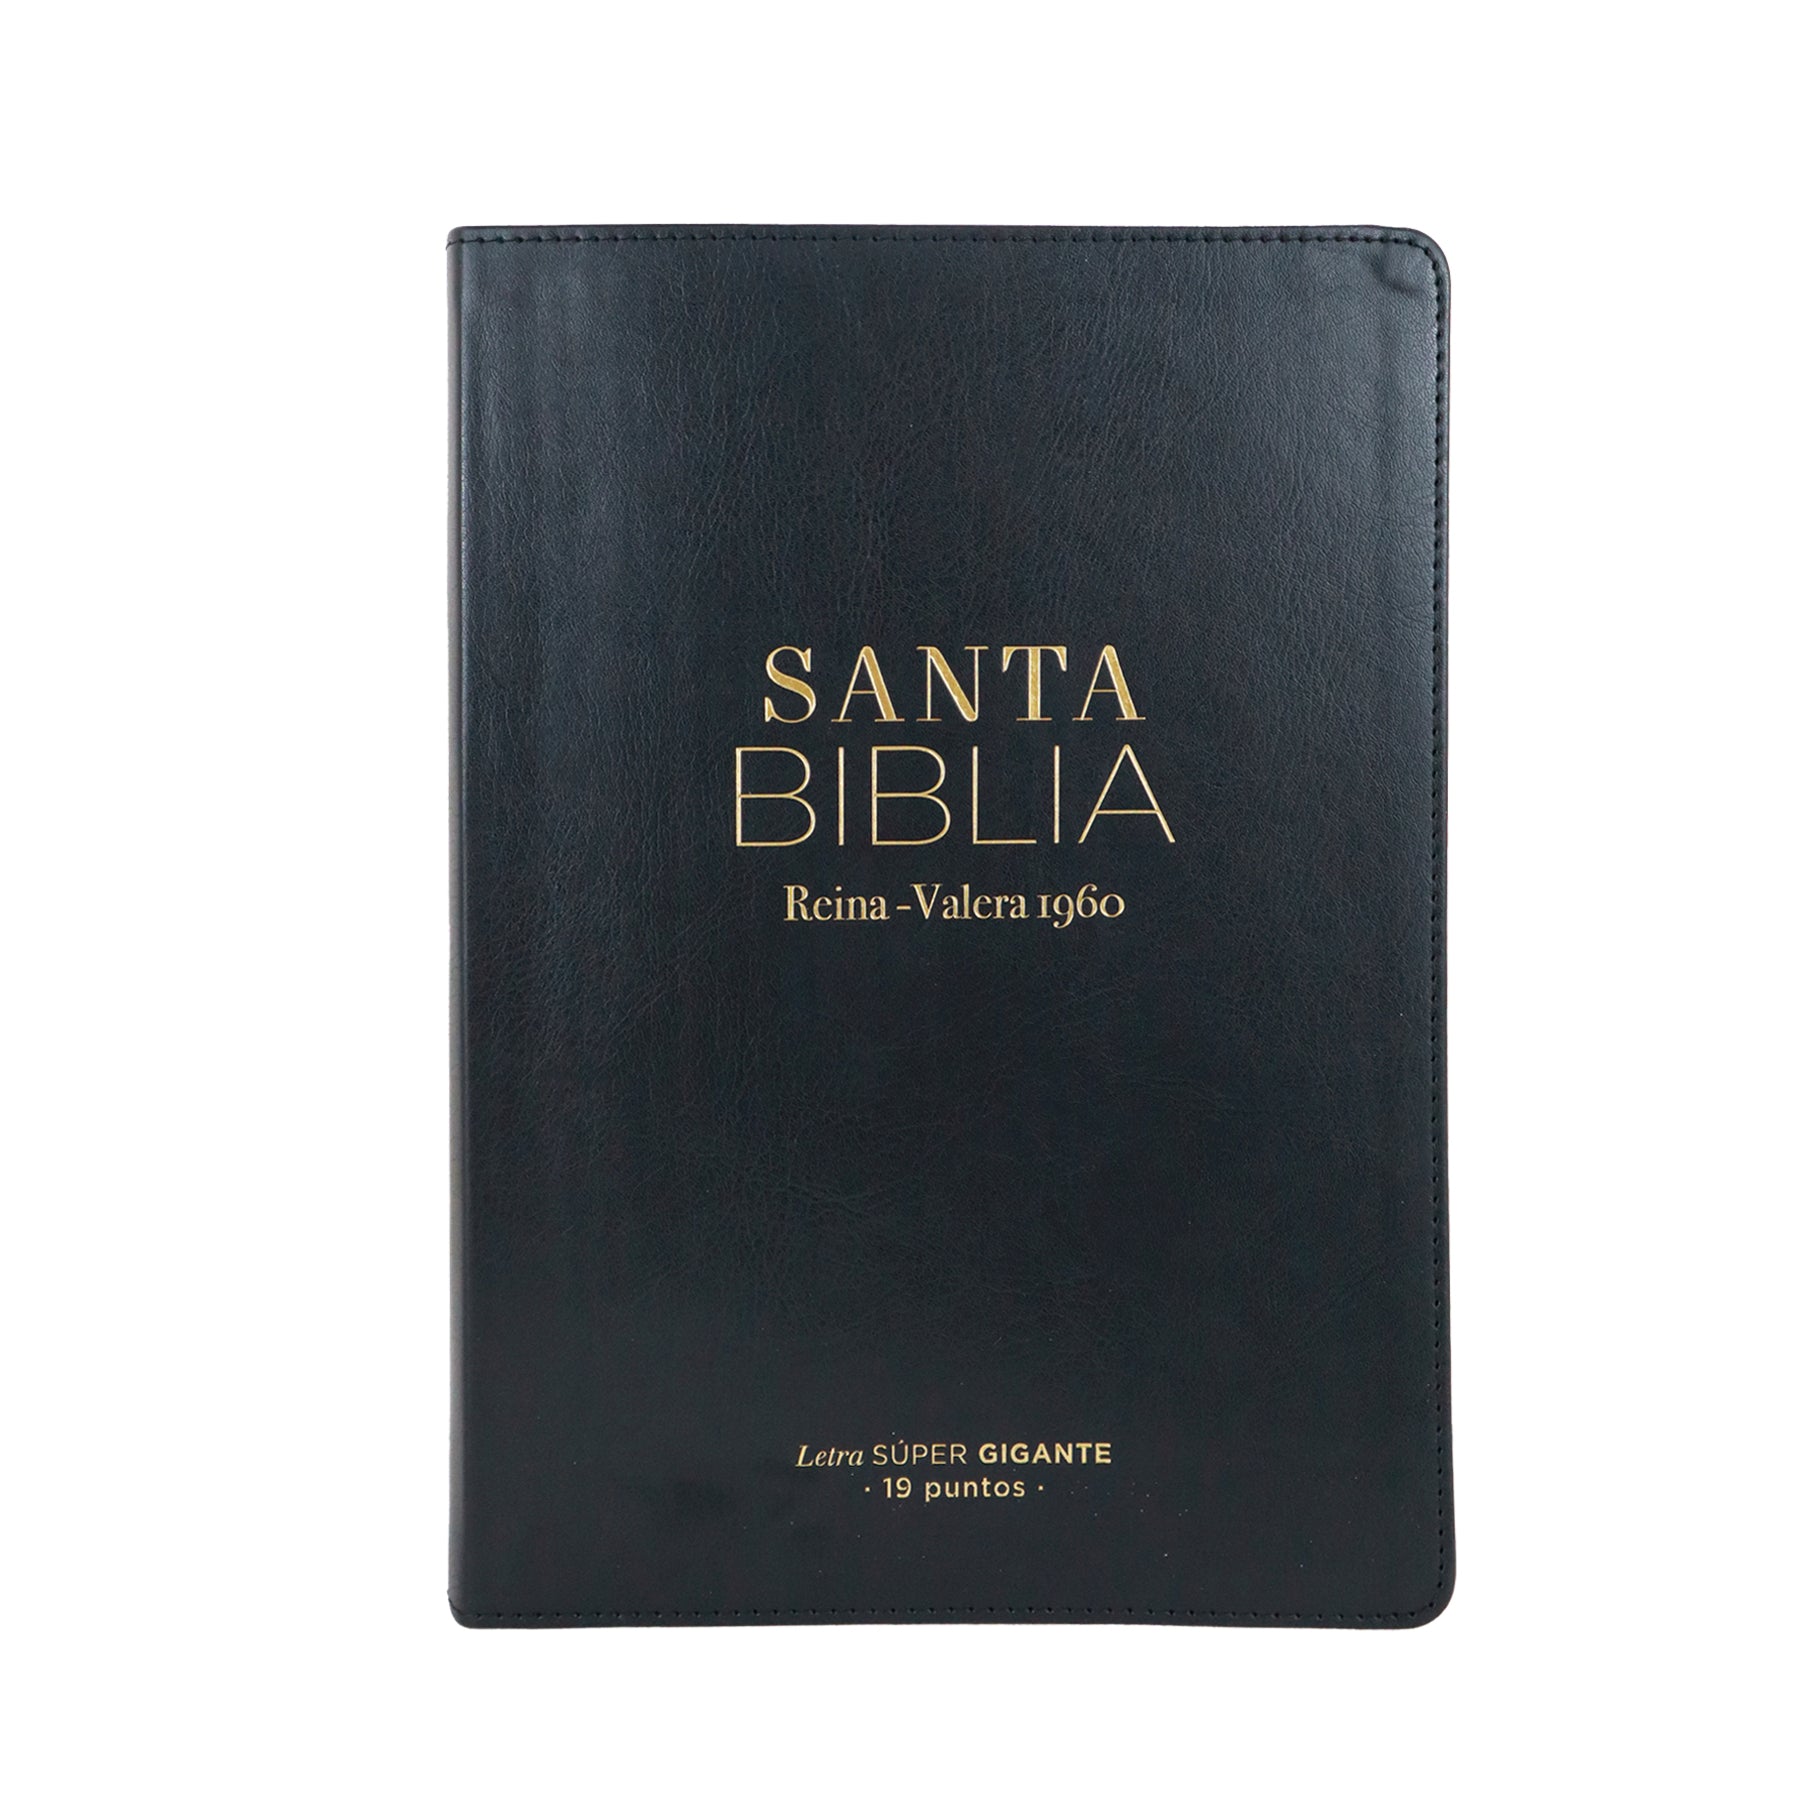 BIBLIA REINA VALERA 1960 LETRA SÚPER GIGANTE CLÁSICA NEGRA INDICE